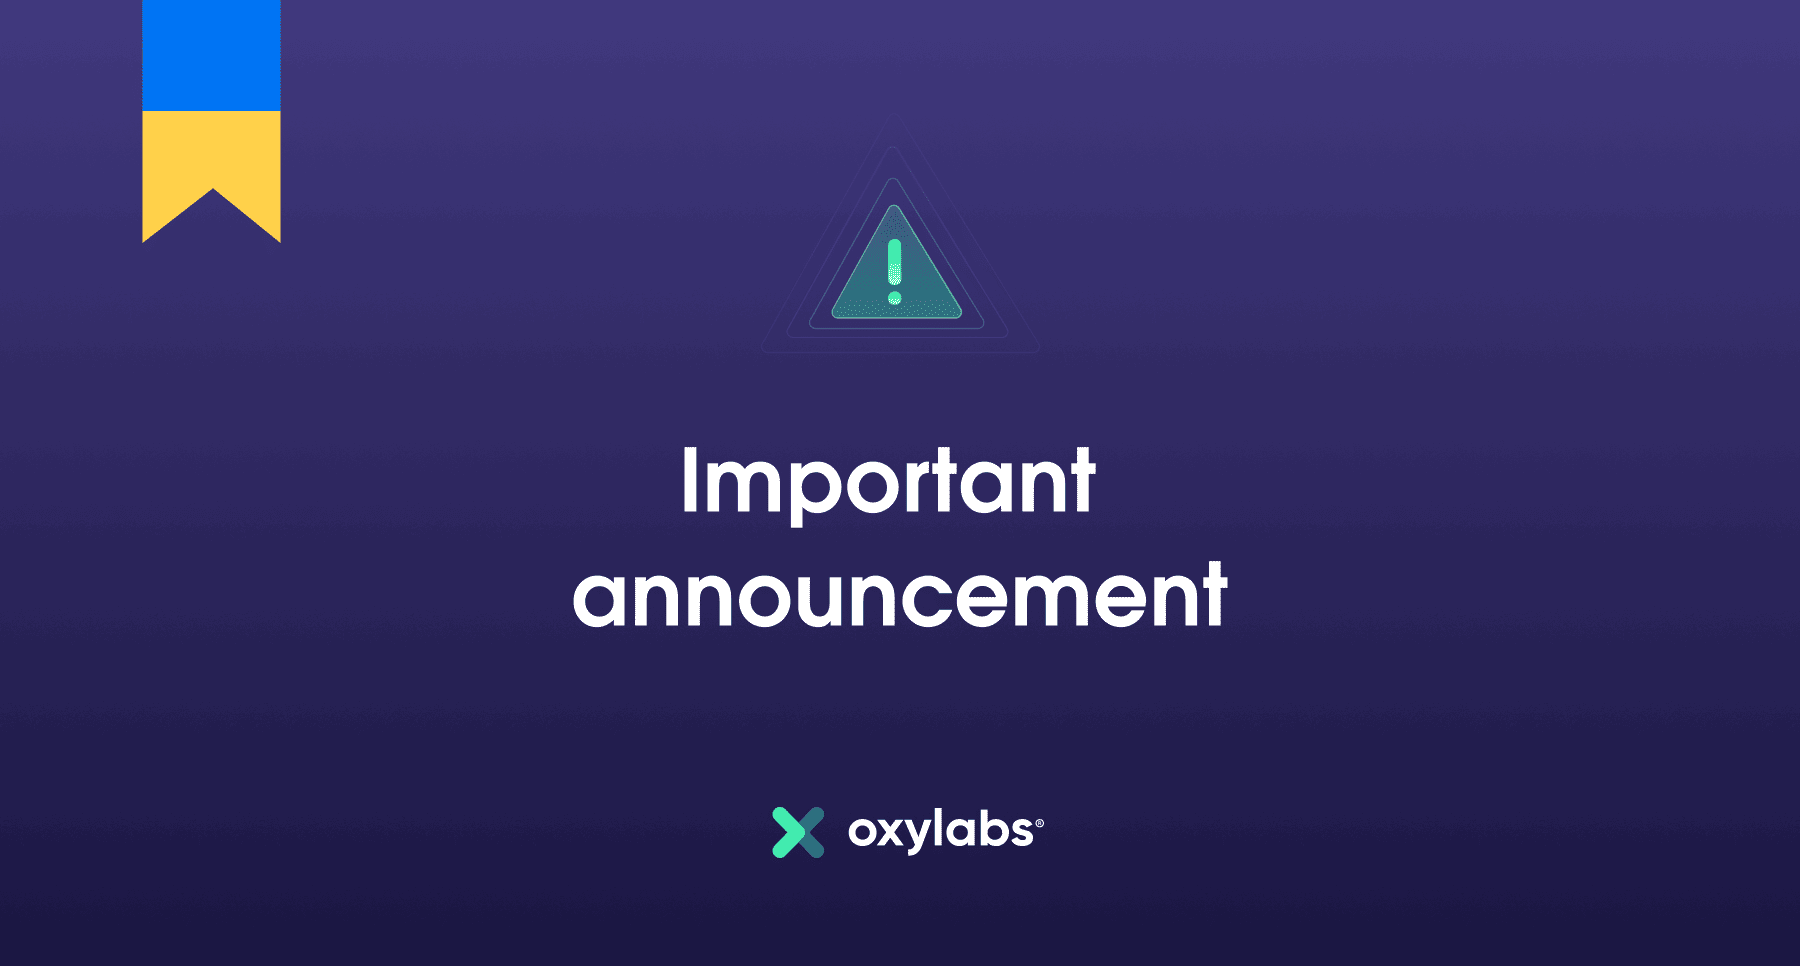 oxylabs ukraine announcement